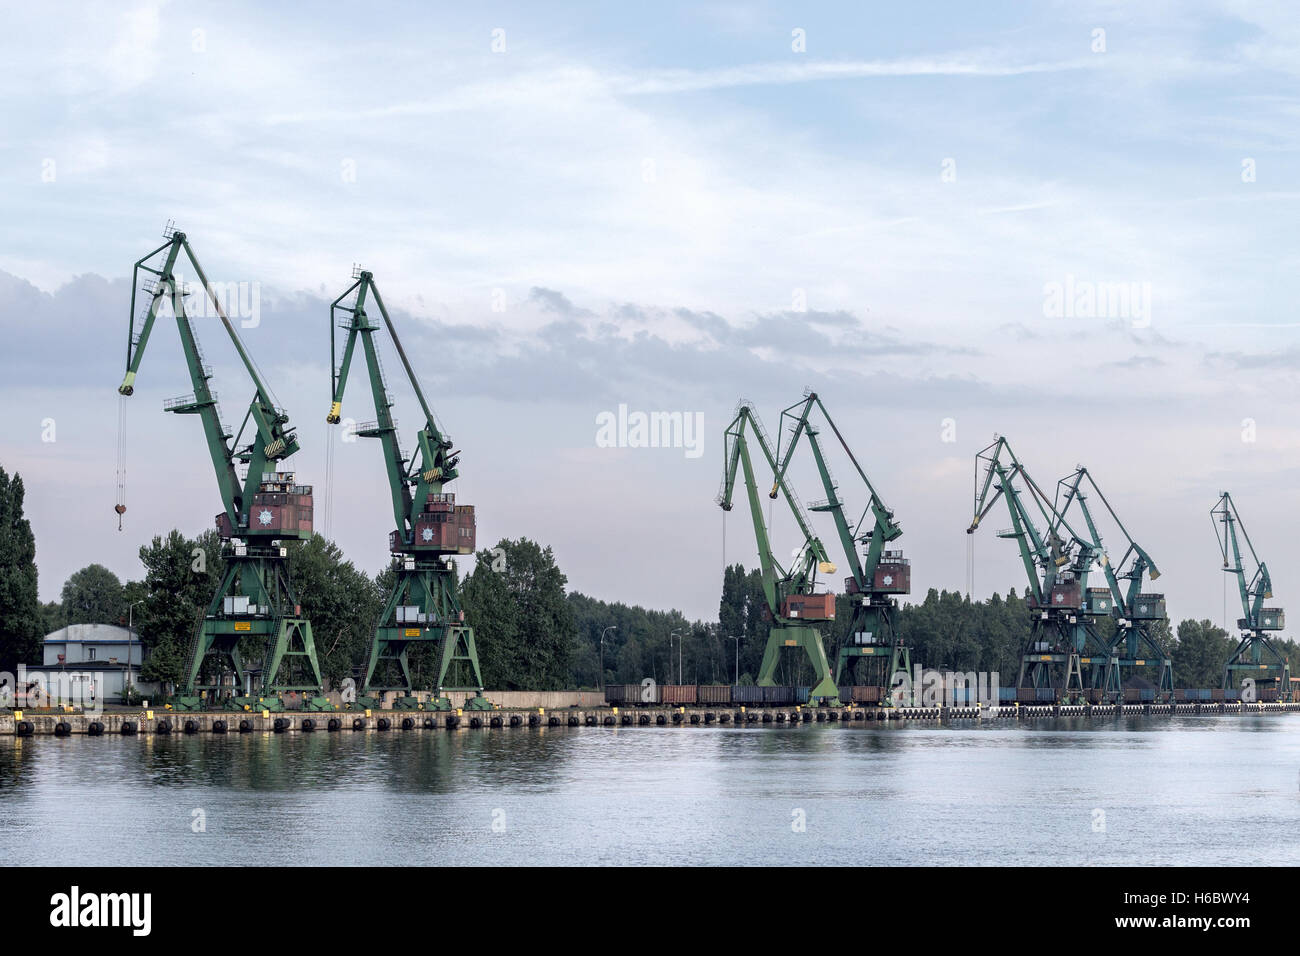 Industrie, Top-Dreharbeiten luffing-Jib Turmdrehkrane in Werftbetrieb, Ansichten entlang des Flusses Motlawa, Danzig, Polen Stockfoto